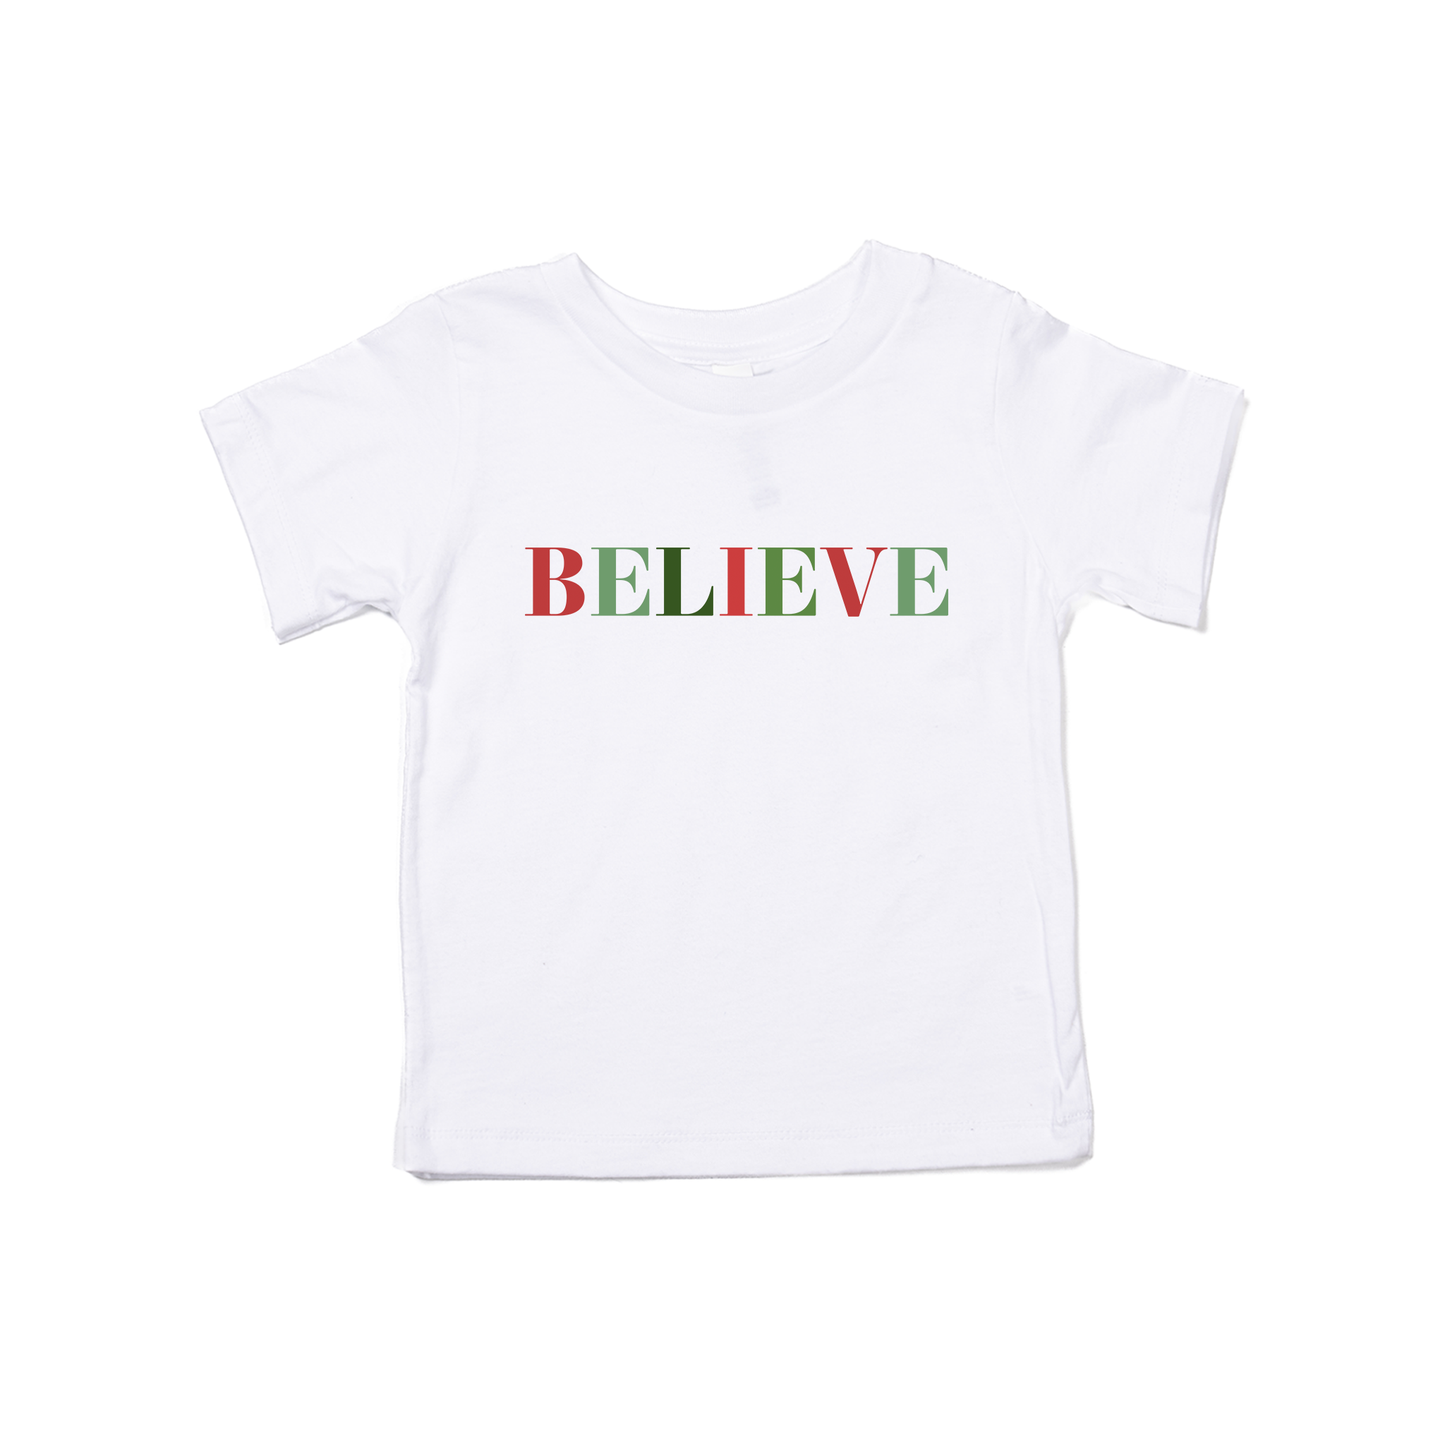 Believe (Multi Color) - Kids Tee (White)